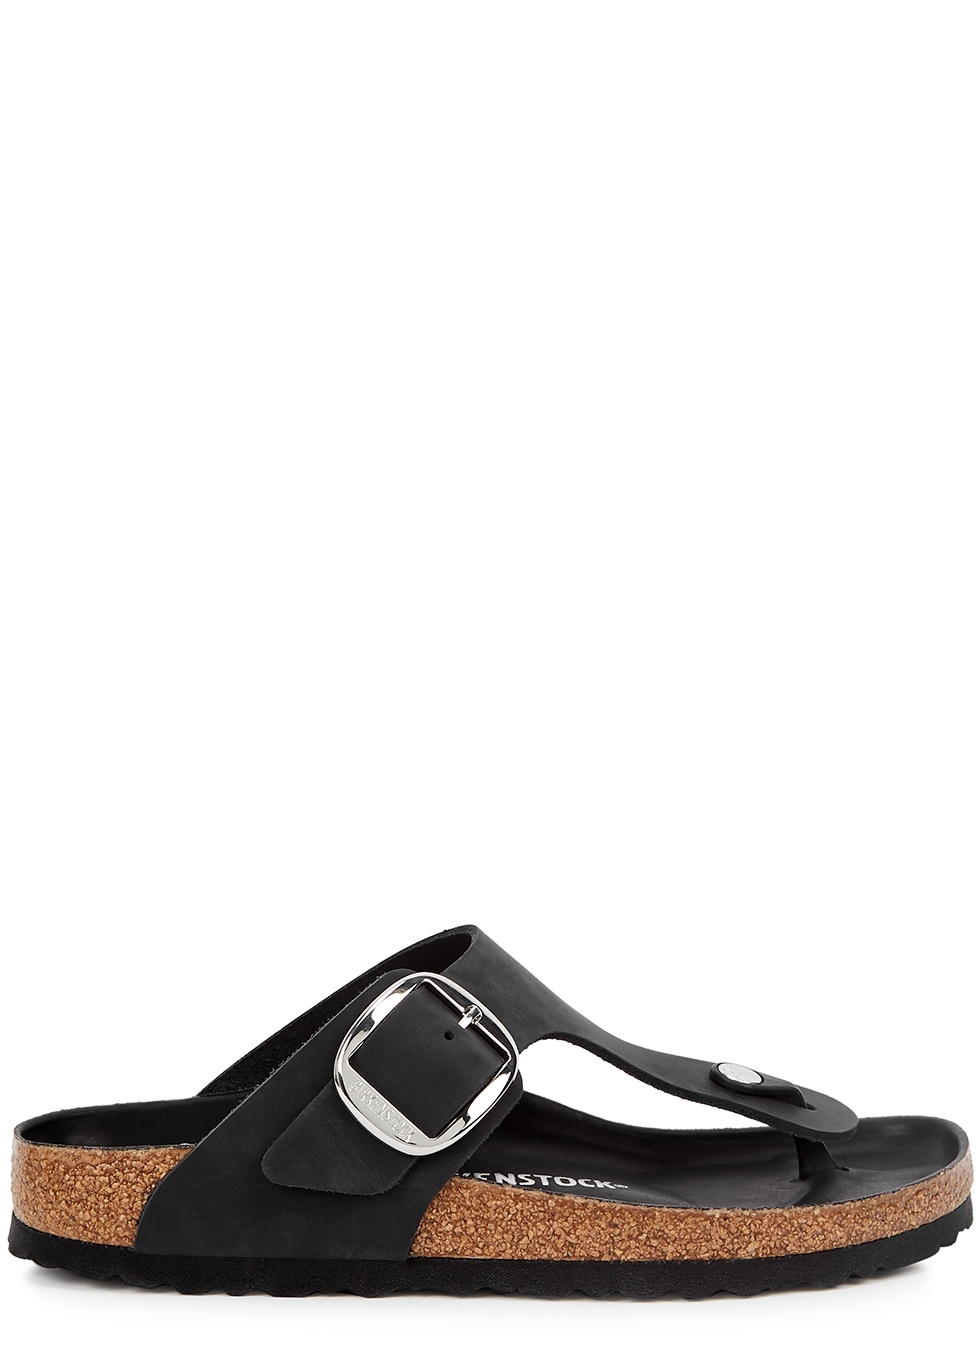 Birkenstock Gizeh black leather thong sandals